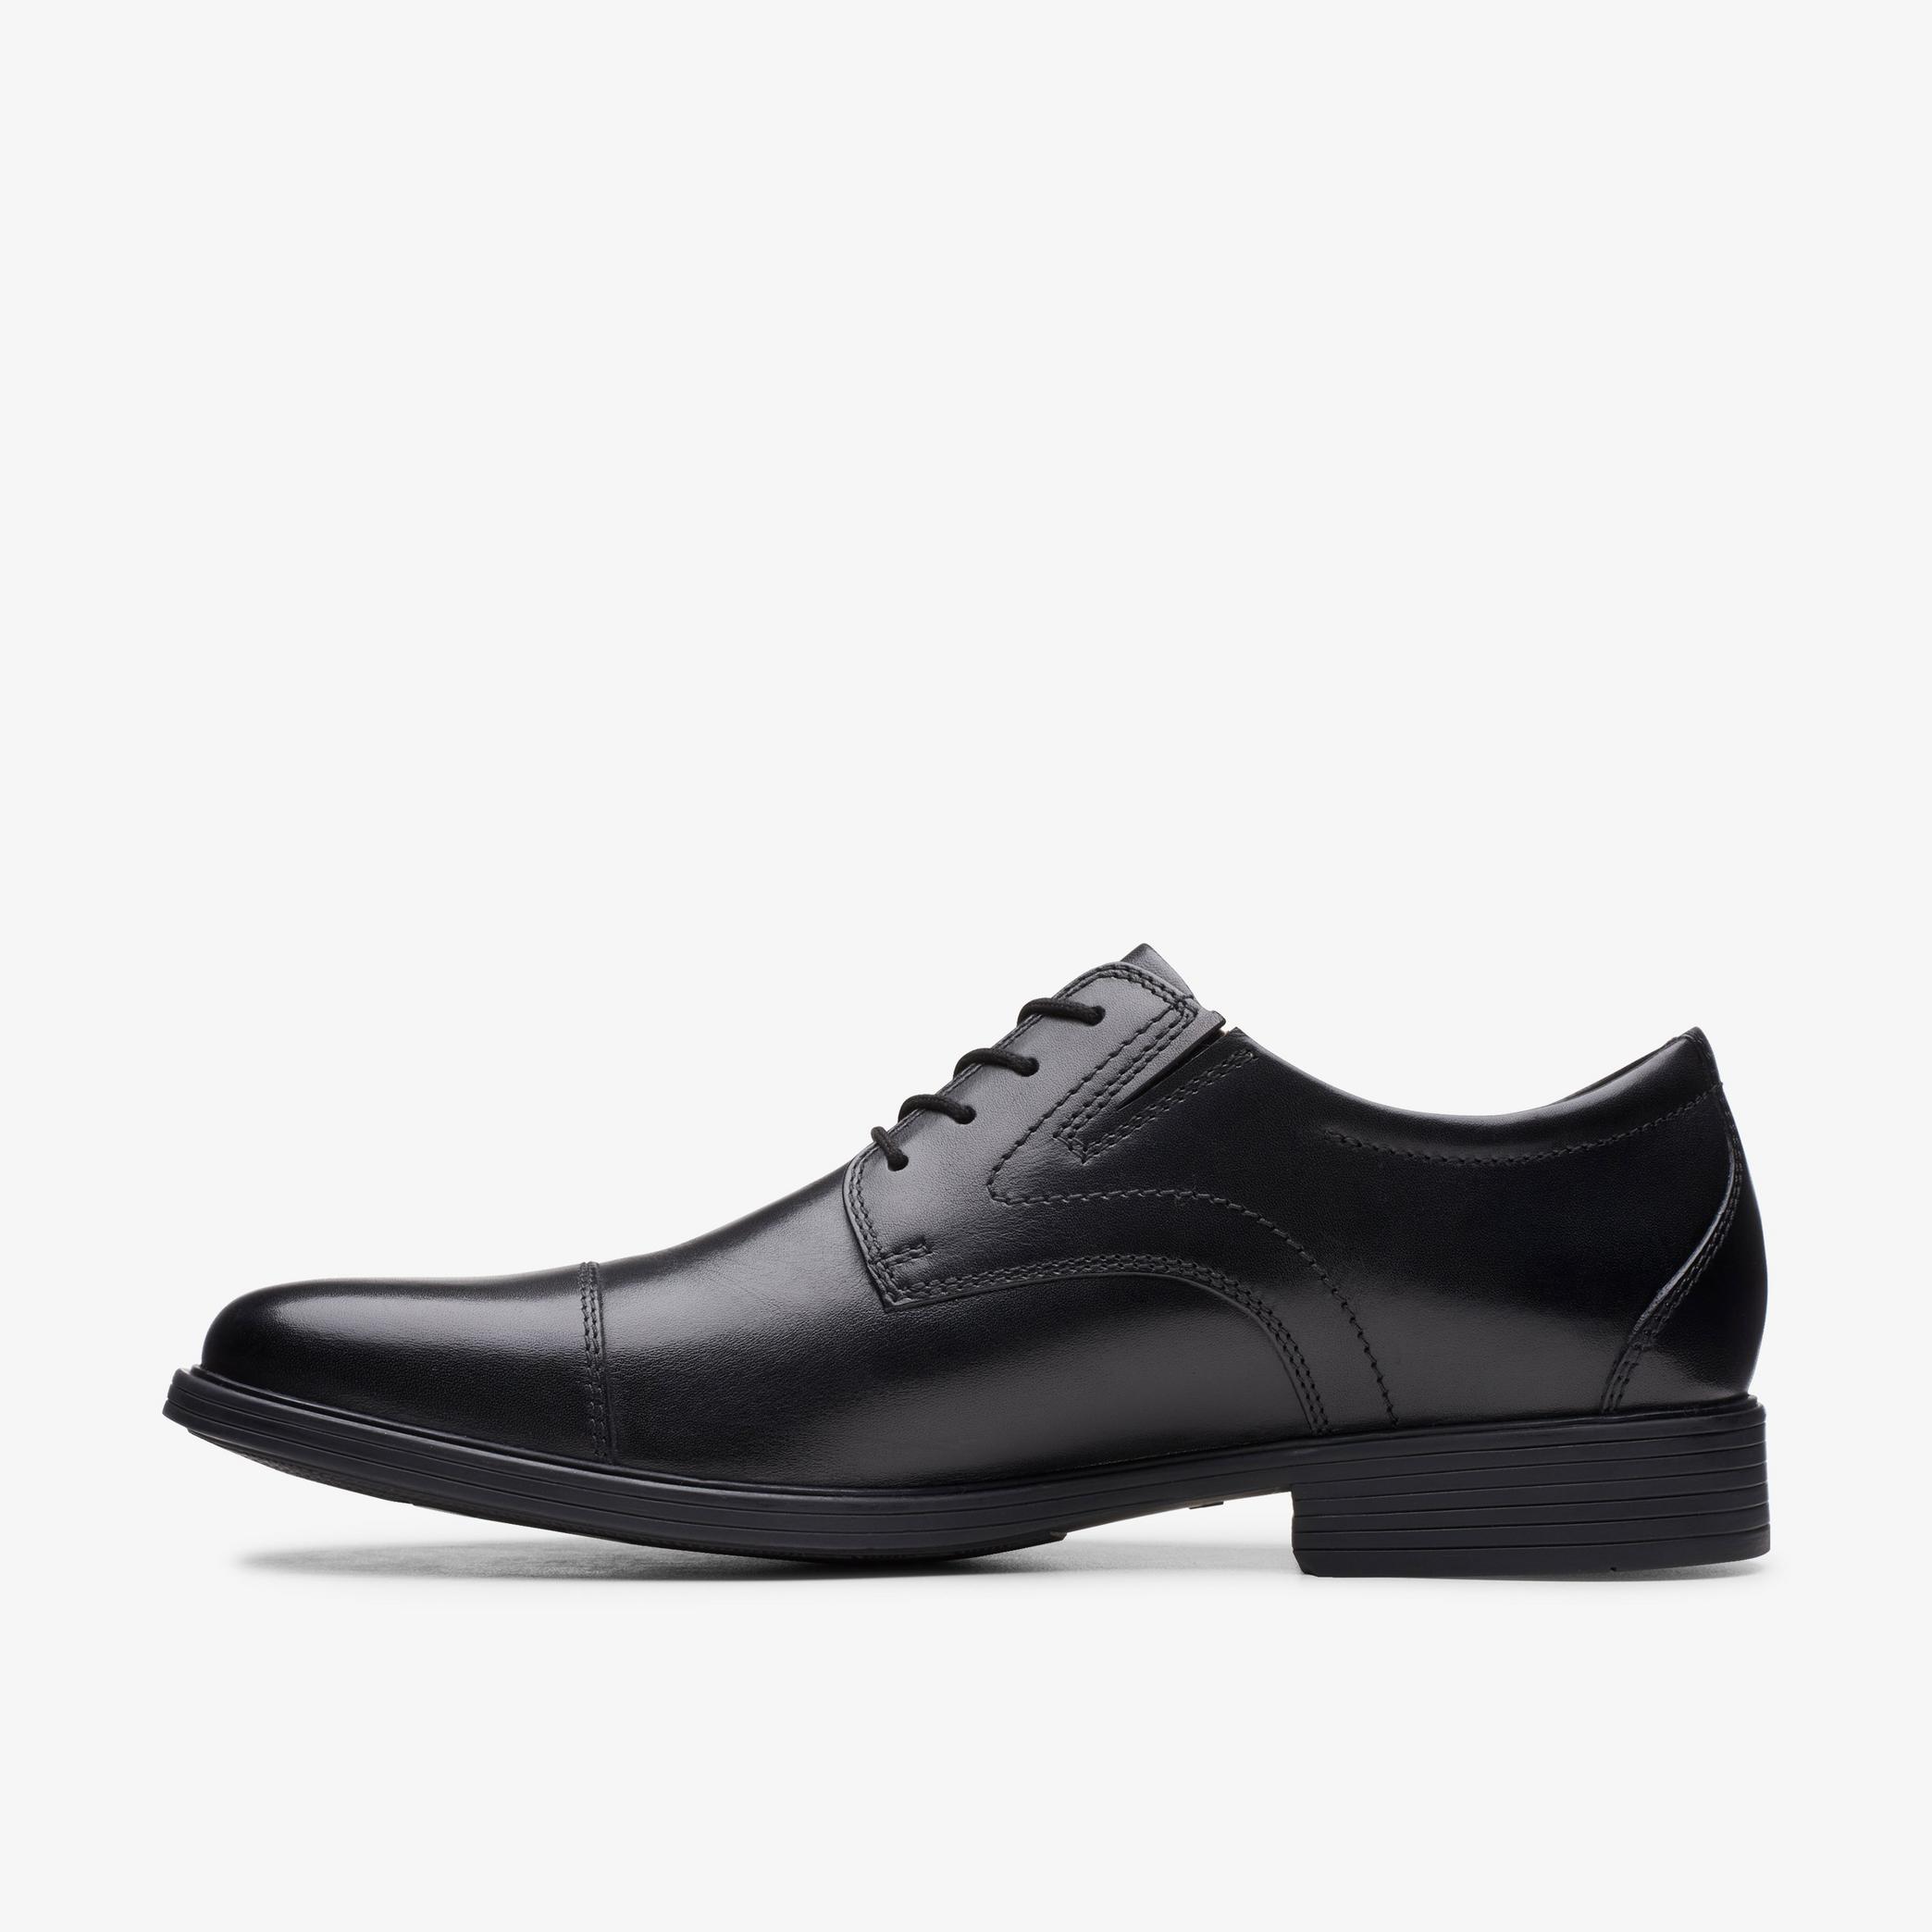 Chaussures Oxford en cuir noir Whiddon Cap, vue 2 de 6